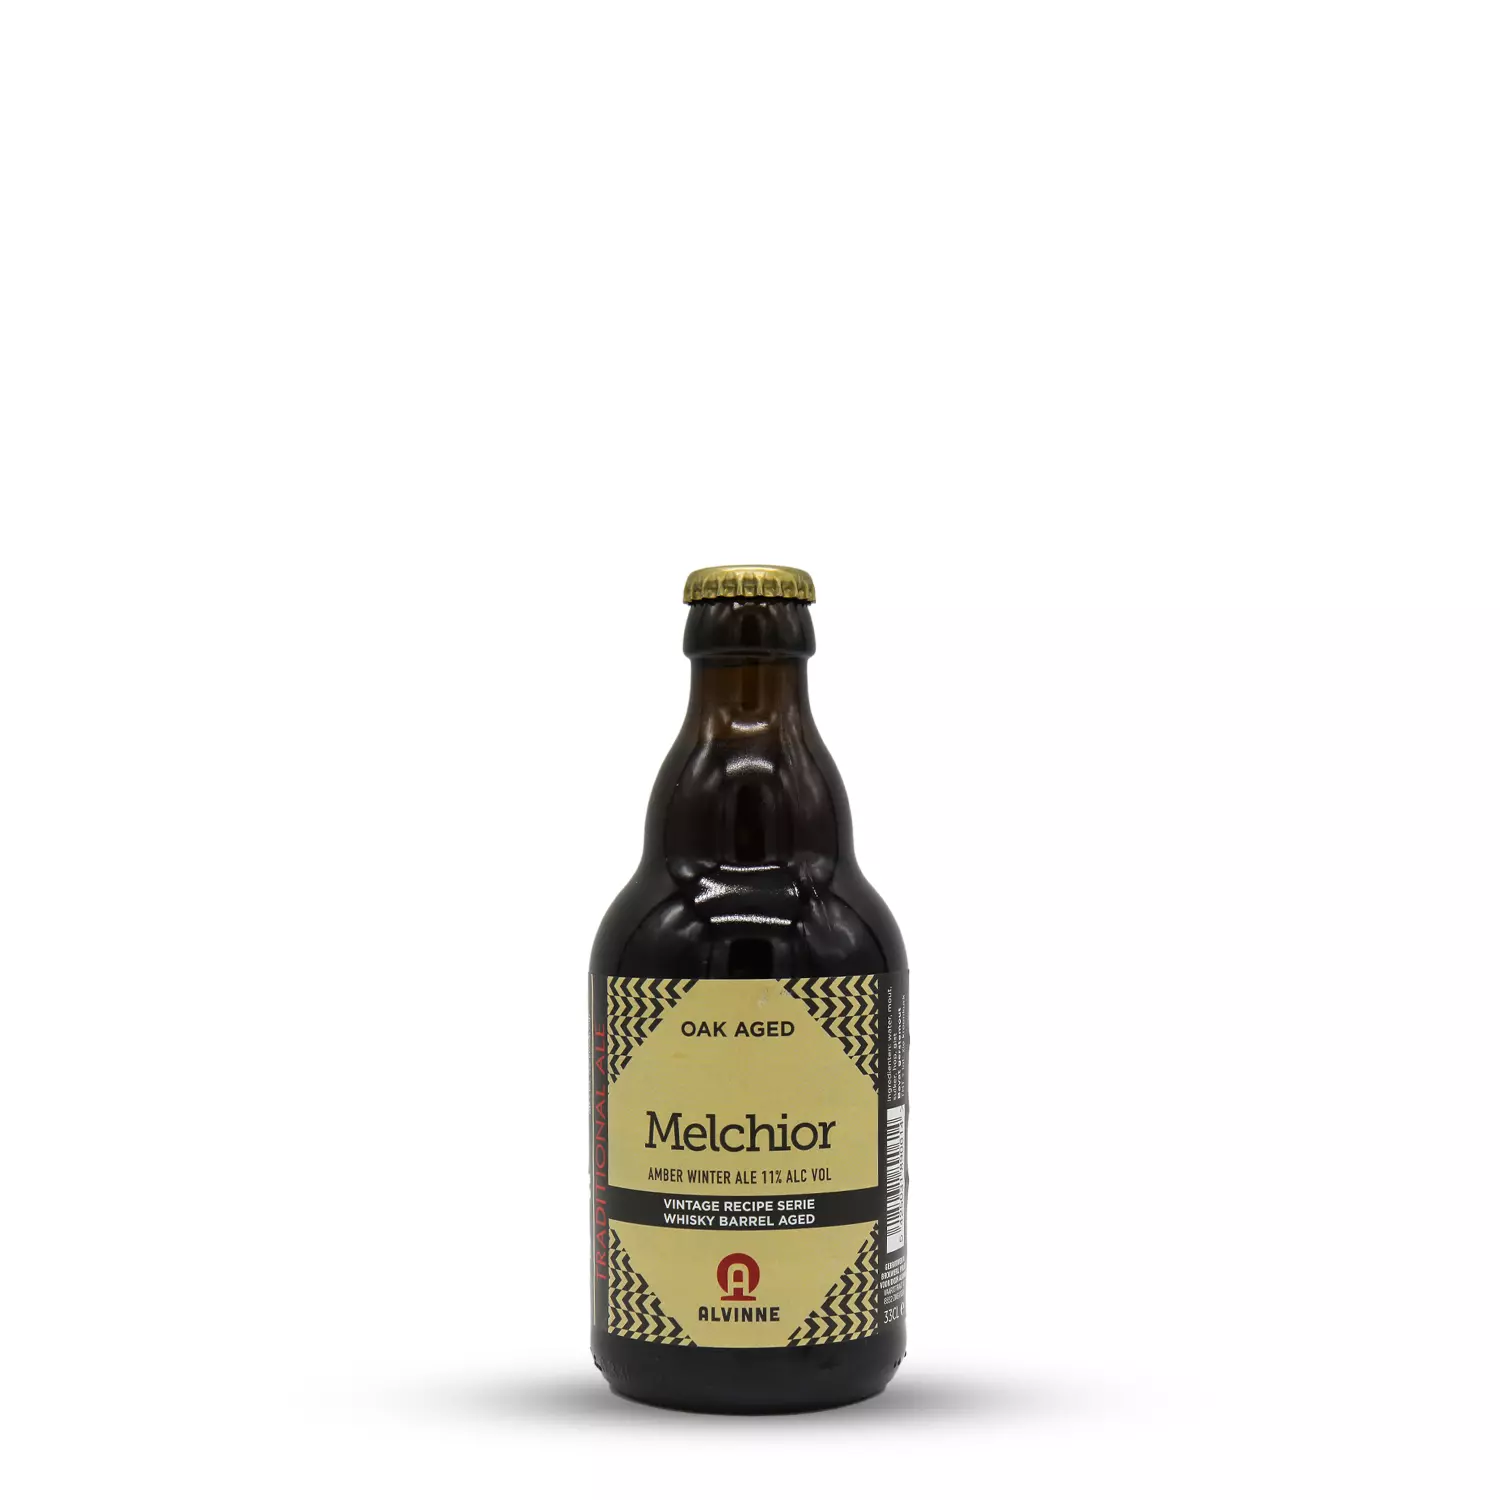 Melchior Vintage Recipe Serie Whisky Barrel Aged | Alvinne (BE) | 0,33L - 11%